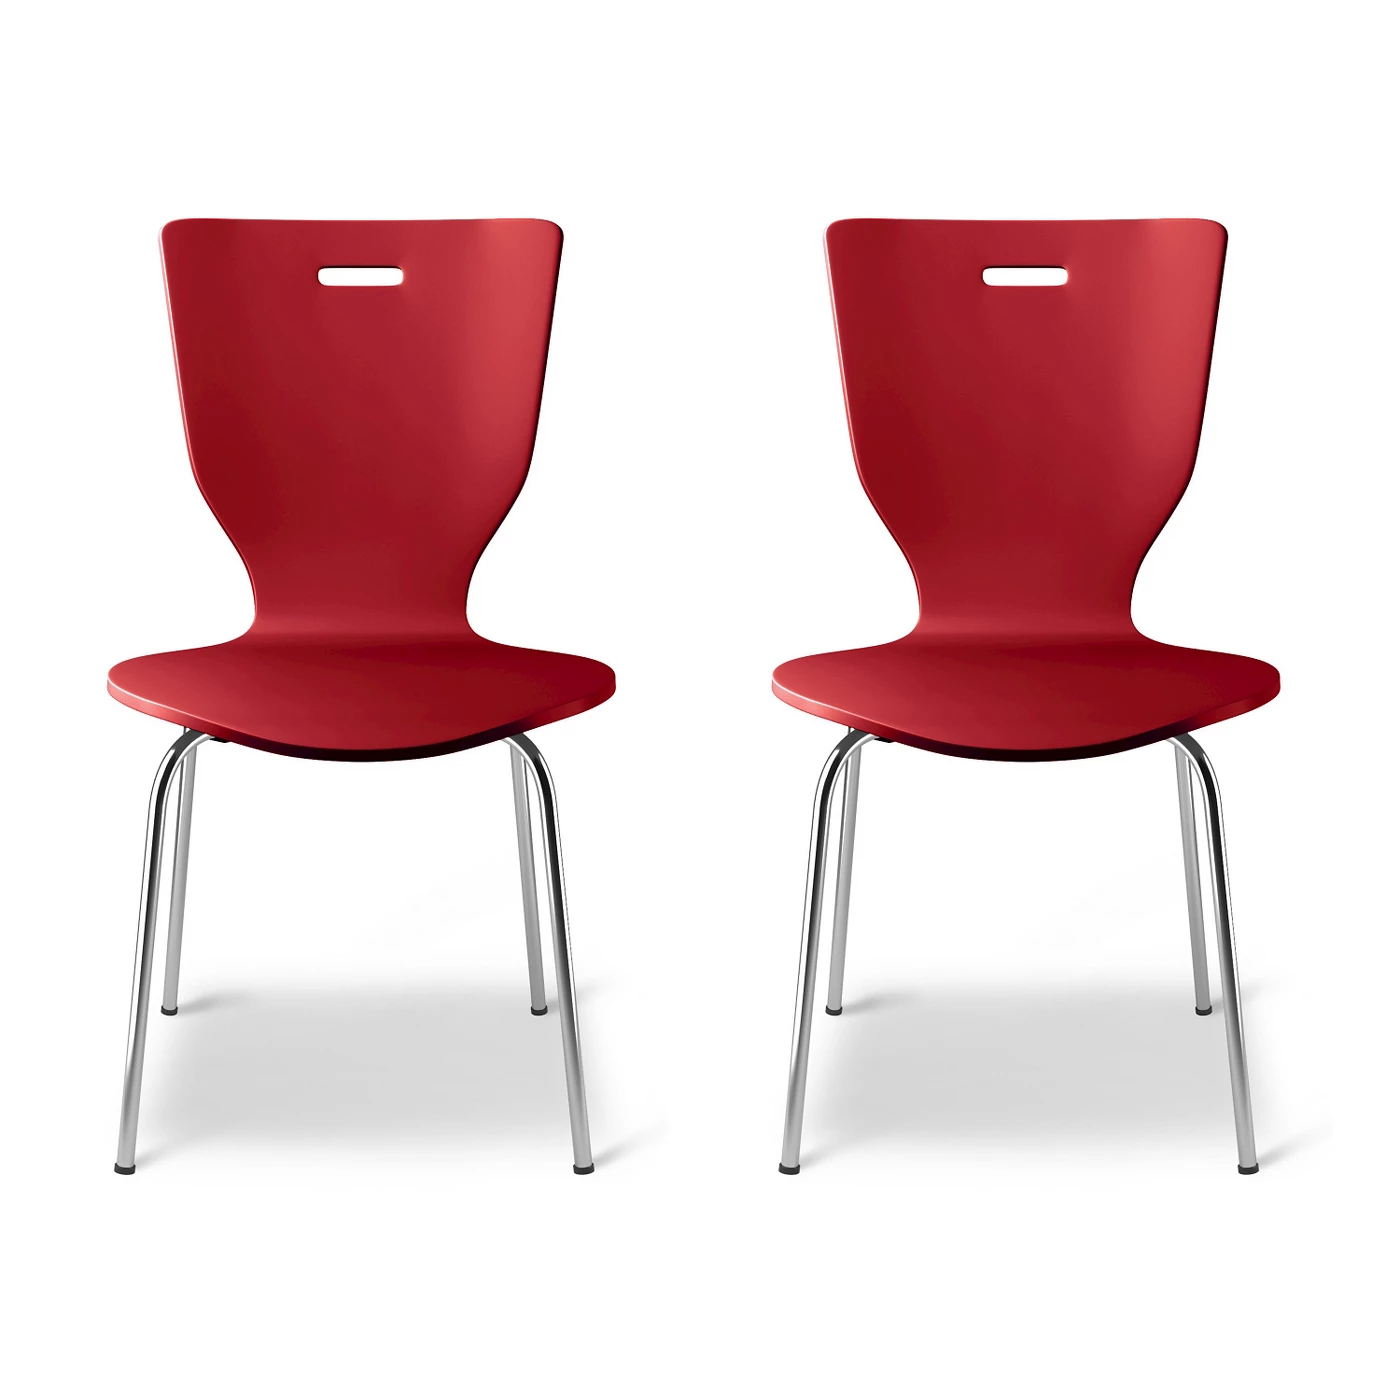 Scoop Kids Activity Chair - Stoplight Red (Set of 2) - Pillowfortâ¢ - image 1 of 4